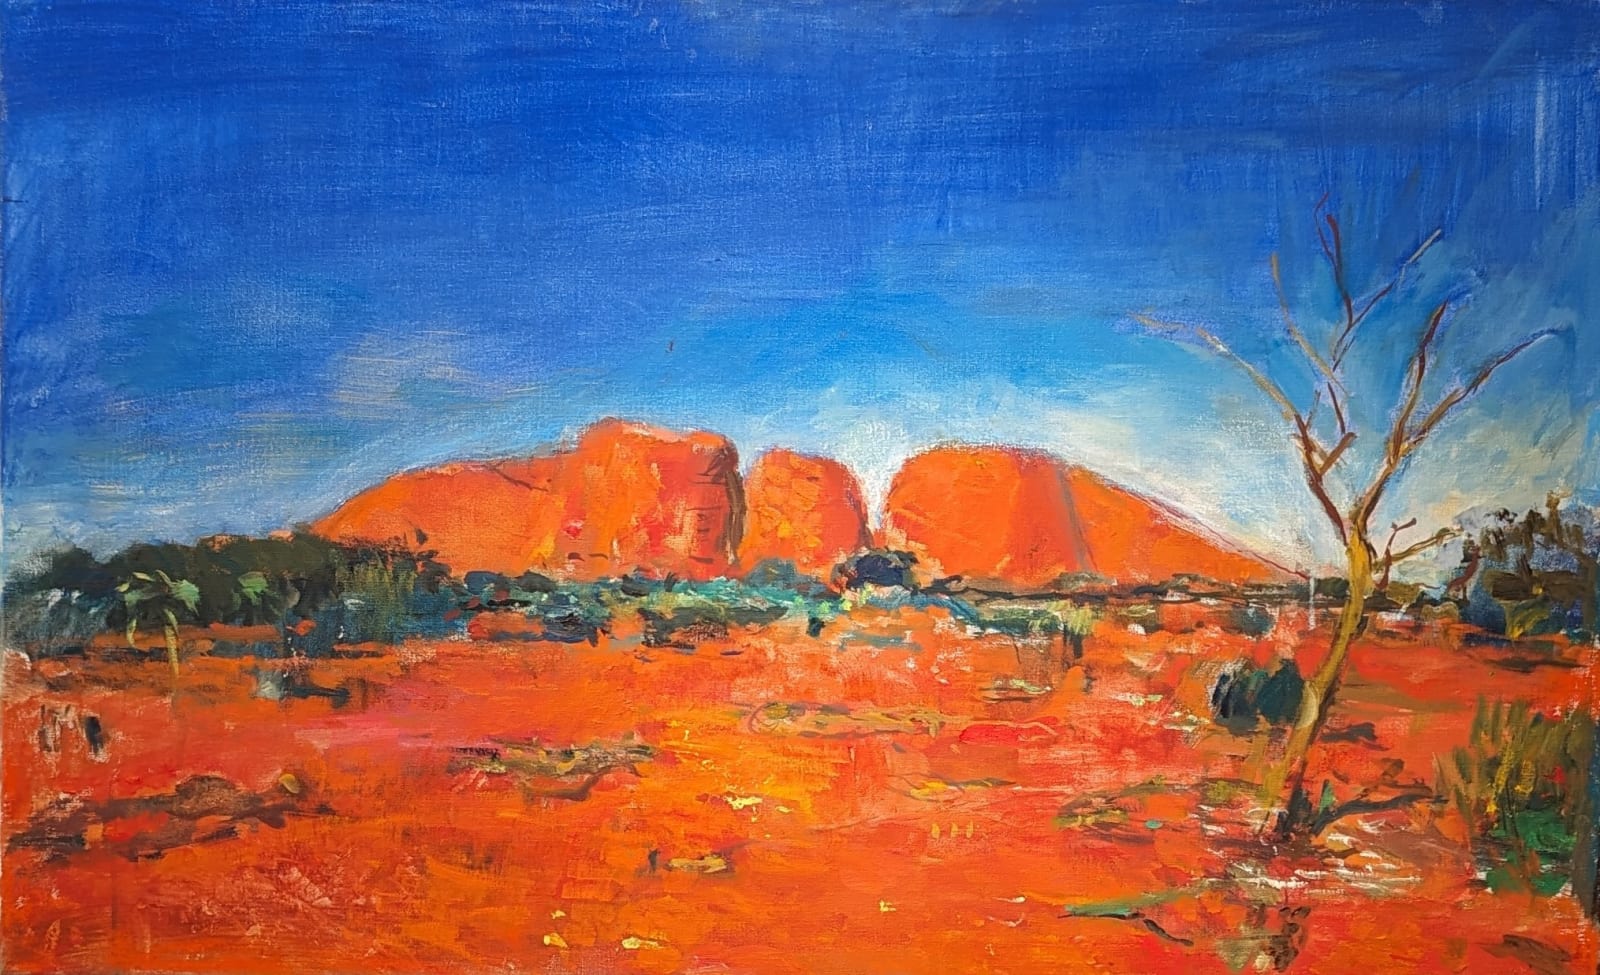 ANTHONY EYTON, Red Landscape, the Olgas, Australia